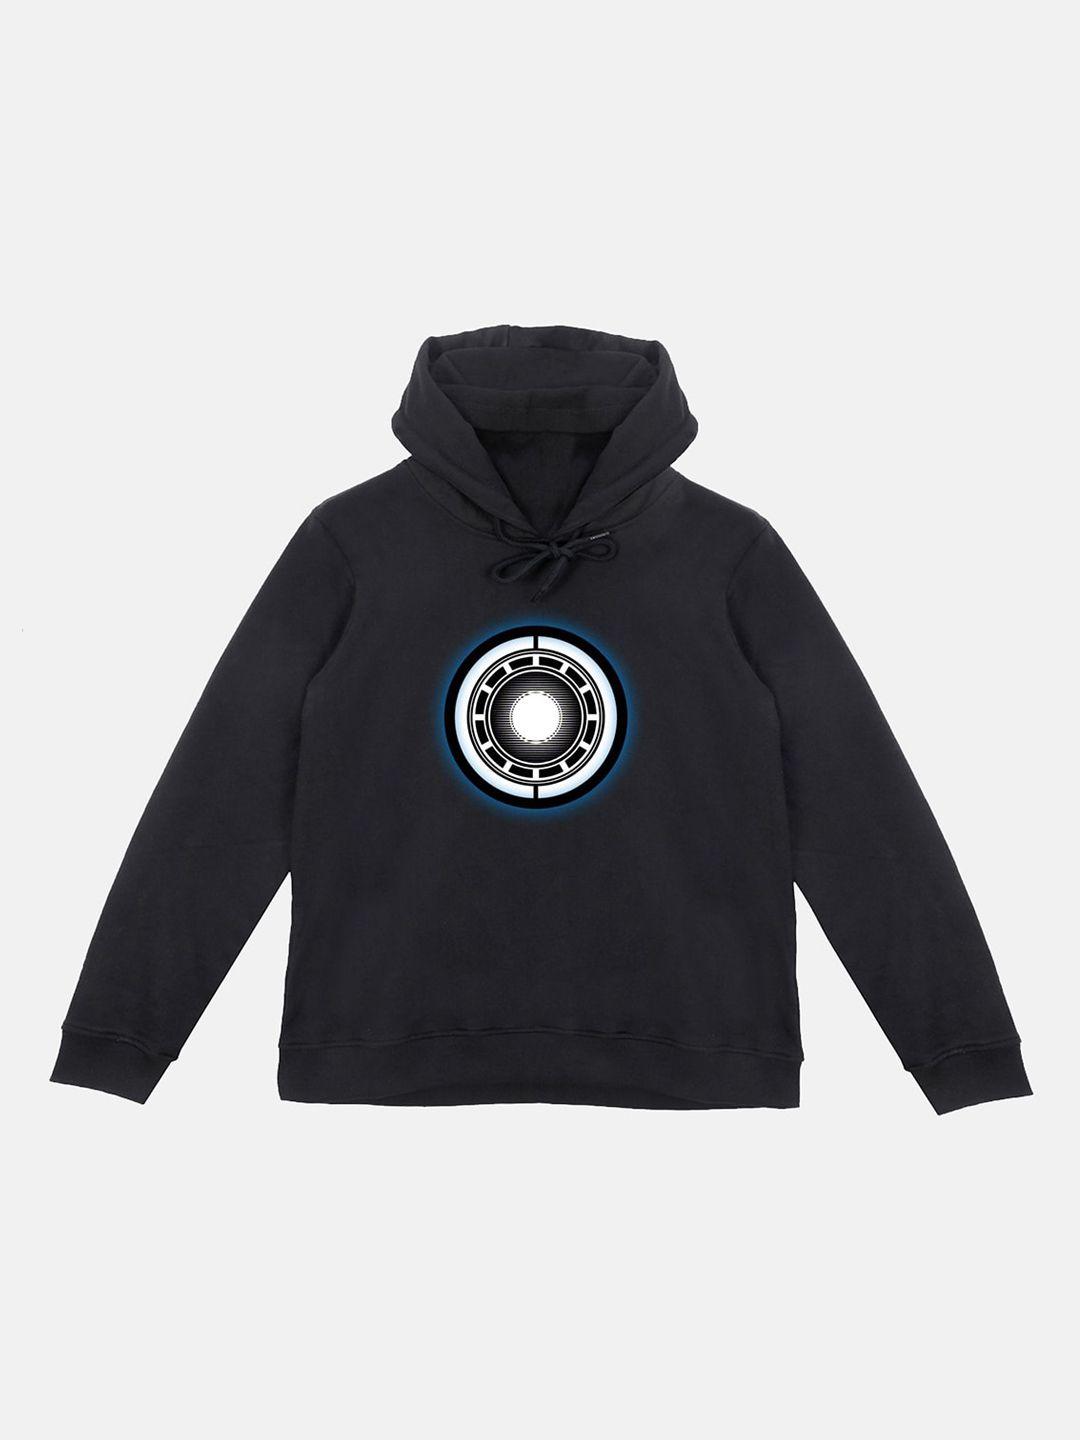 marvel by wear your mind unisex kids black printed sweatshirt